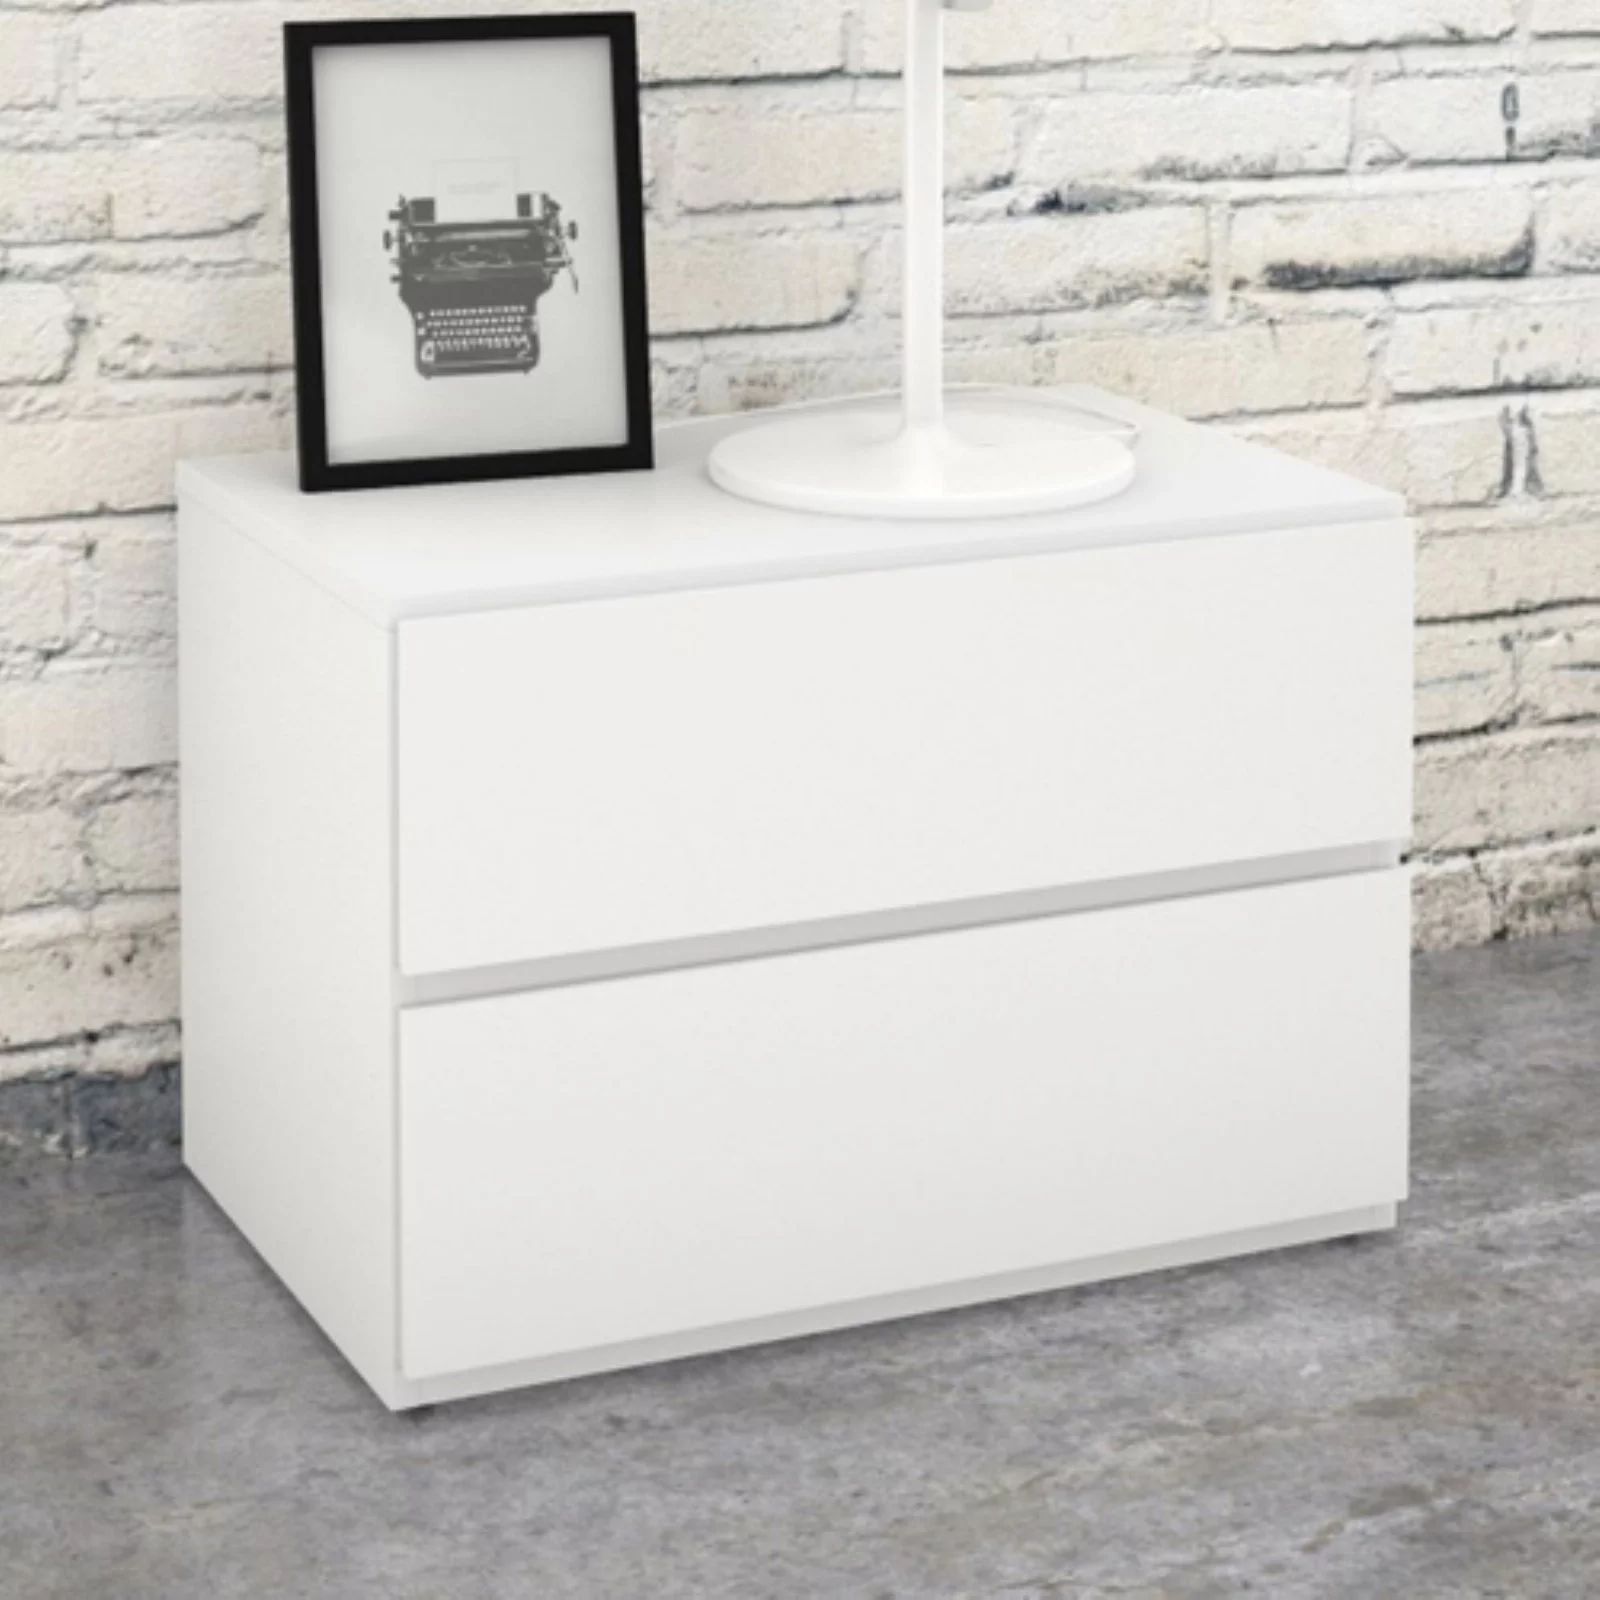 Nexera Modern 1 Drawer / 1 Door Bedroom Nightstand in White Finish | Walmart (US)